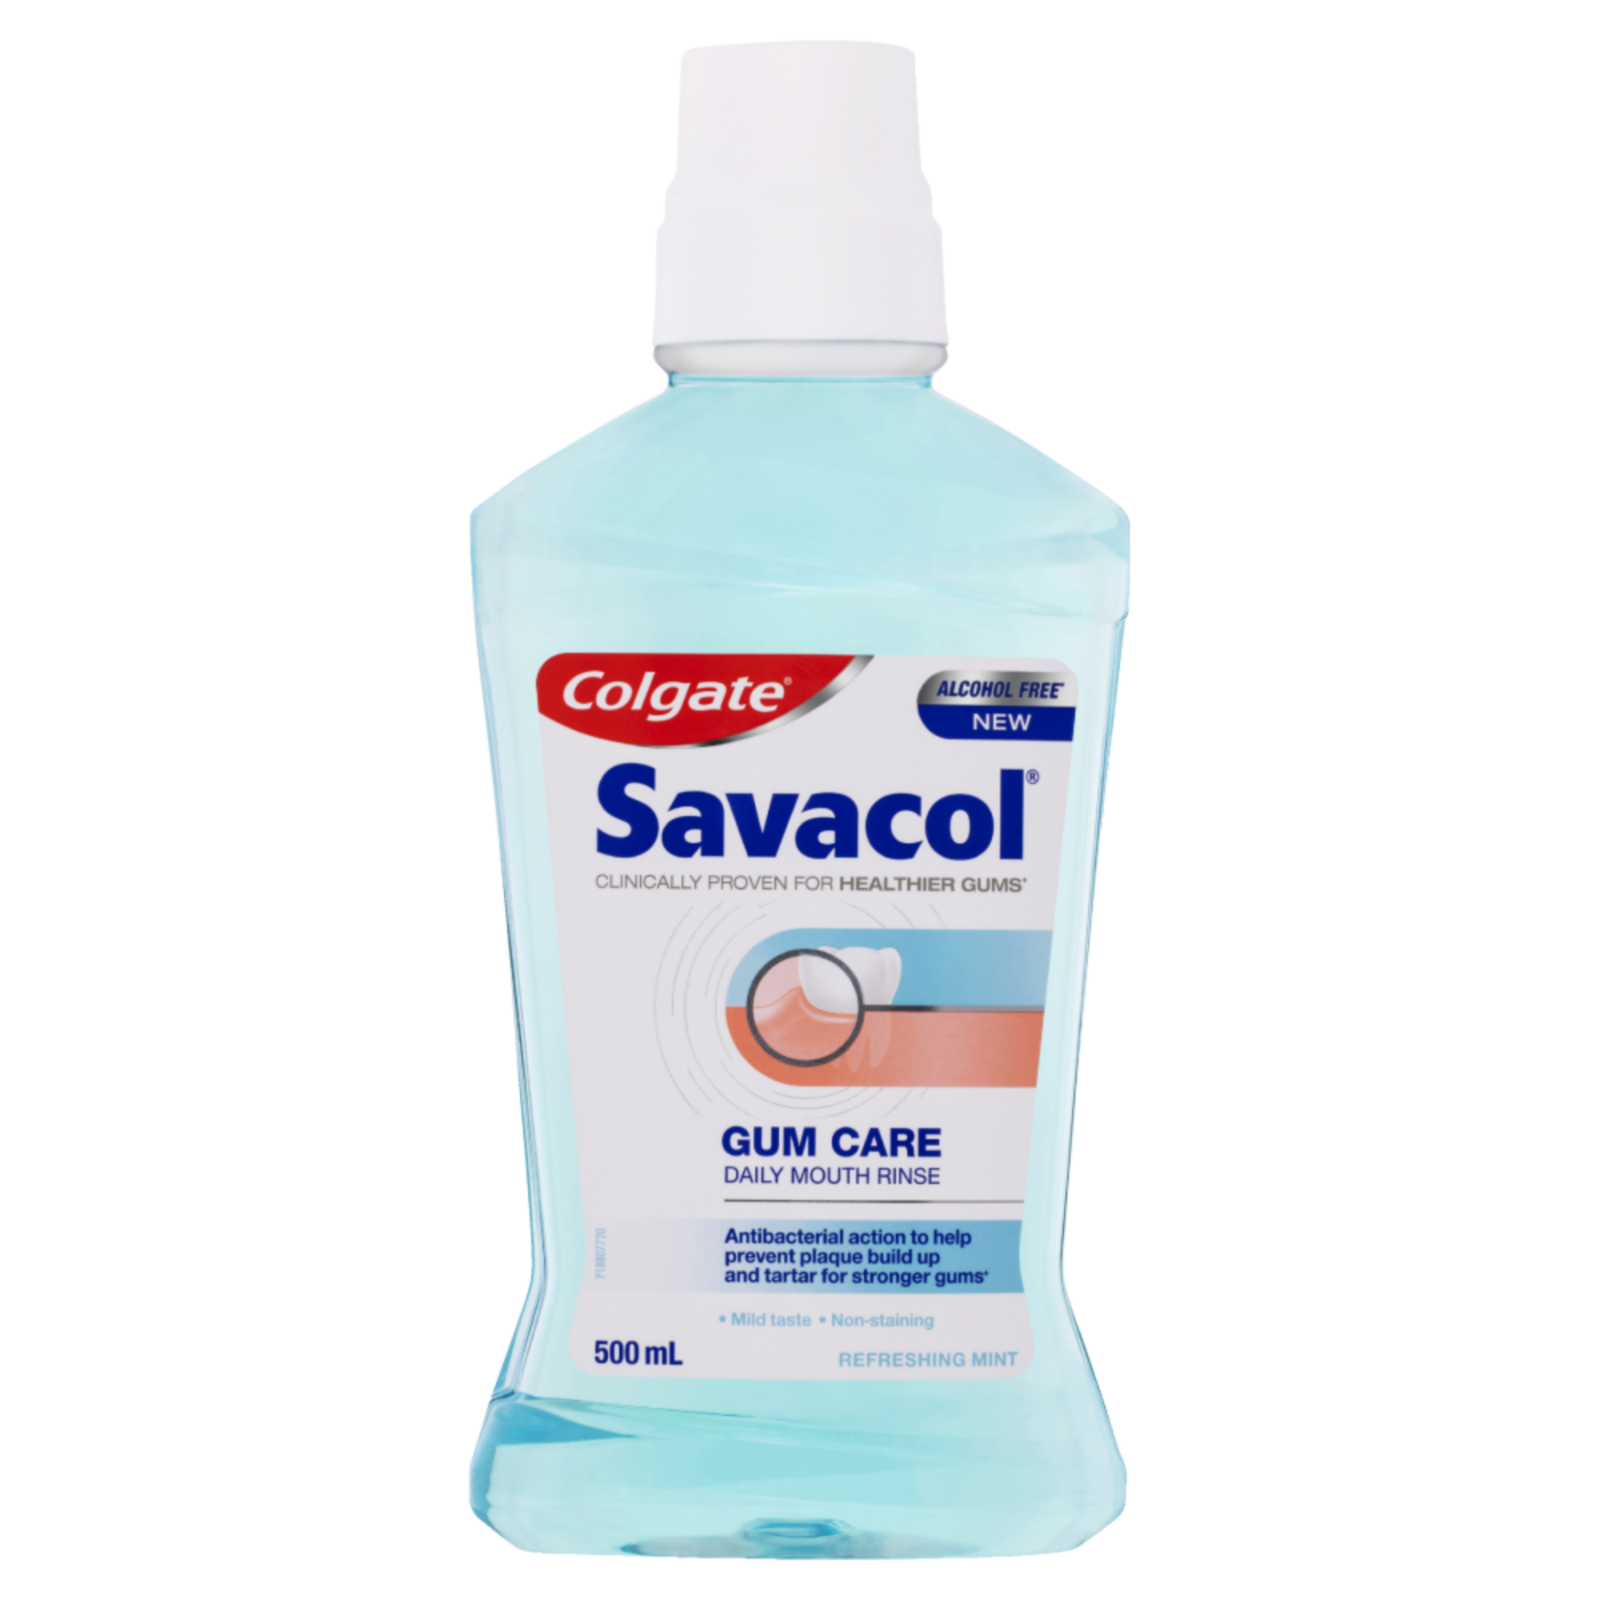 Colgate Savacol Gum Care Daily Mouth Rinse 500mL - $76.51